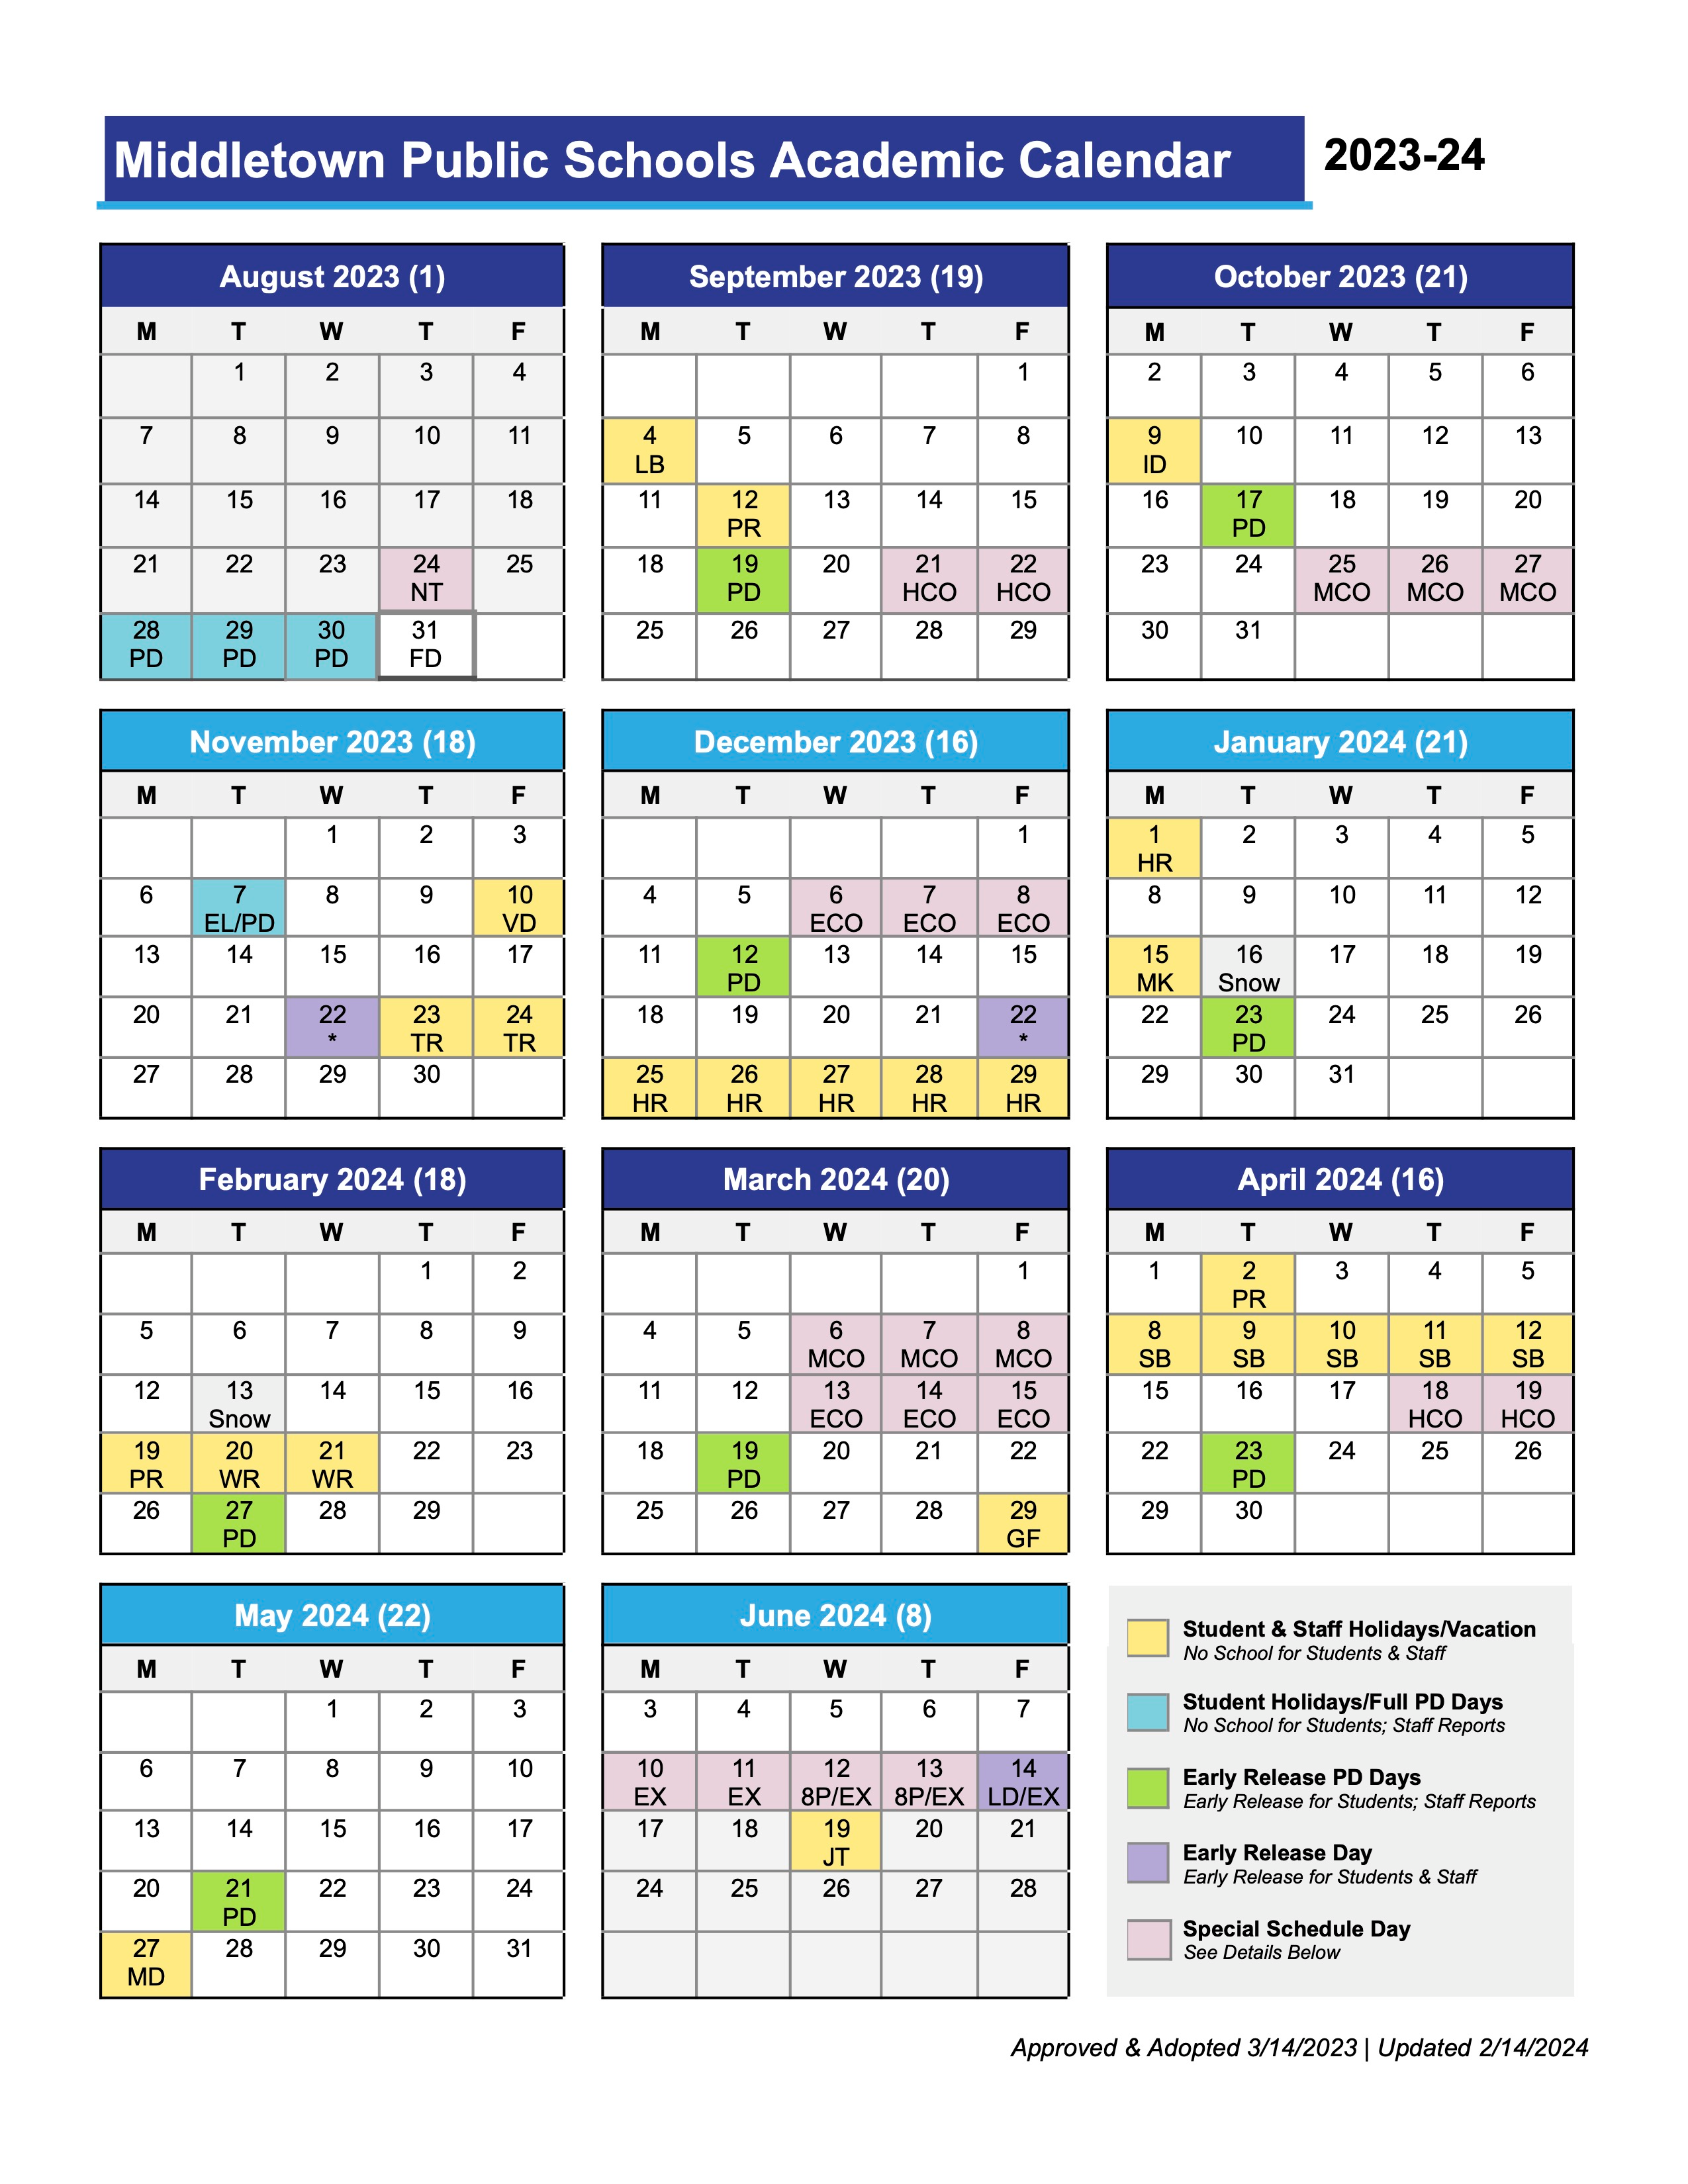 SY24 Academic Calendar Page 1 